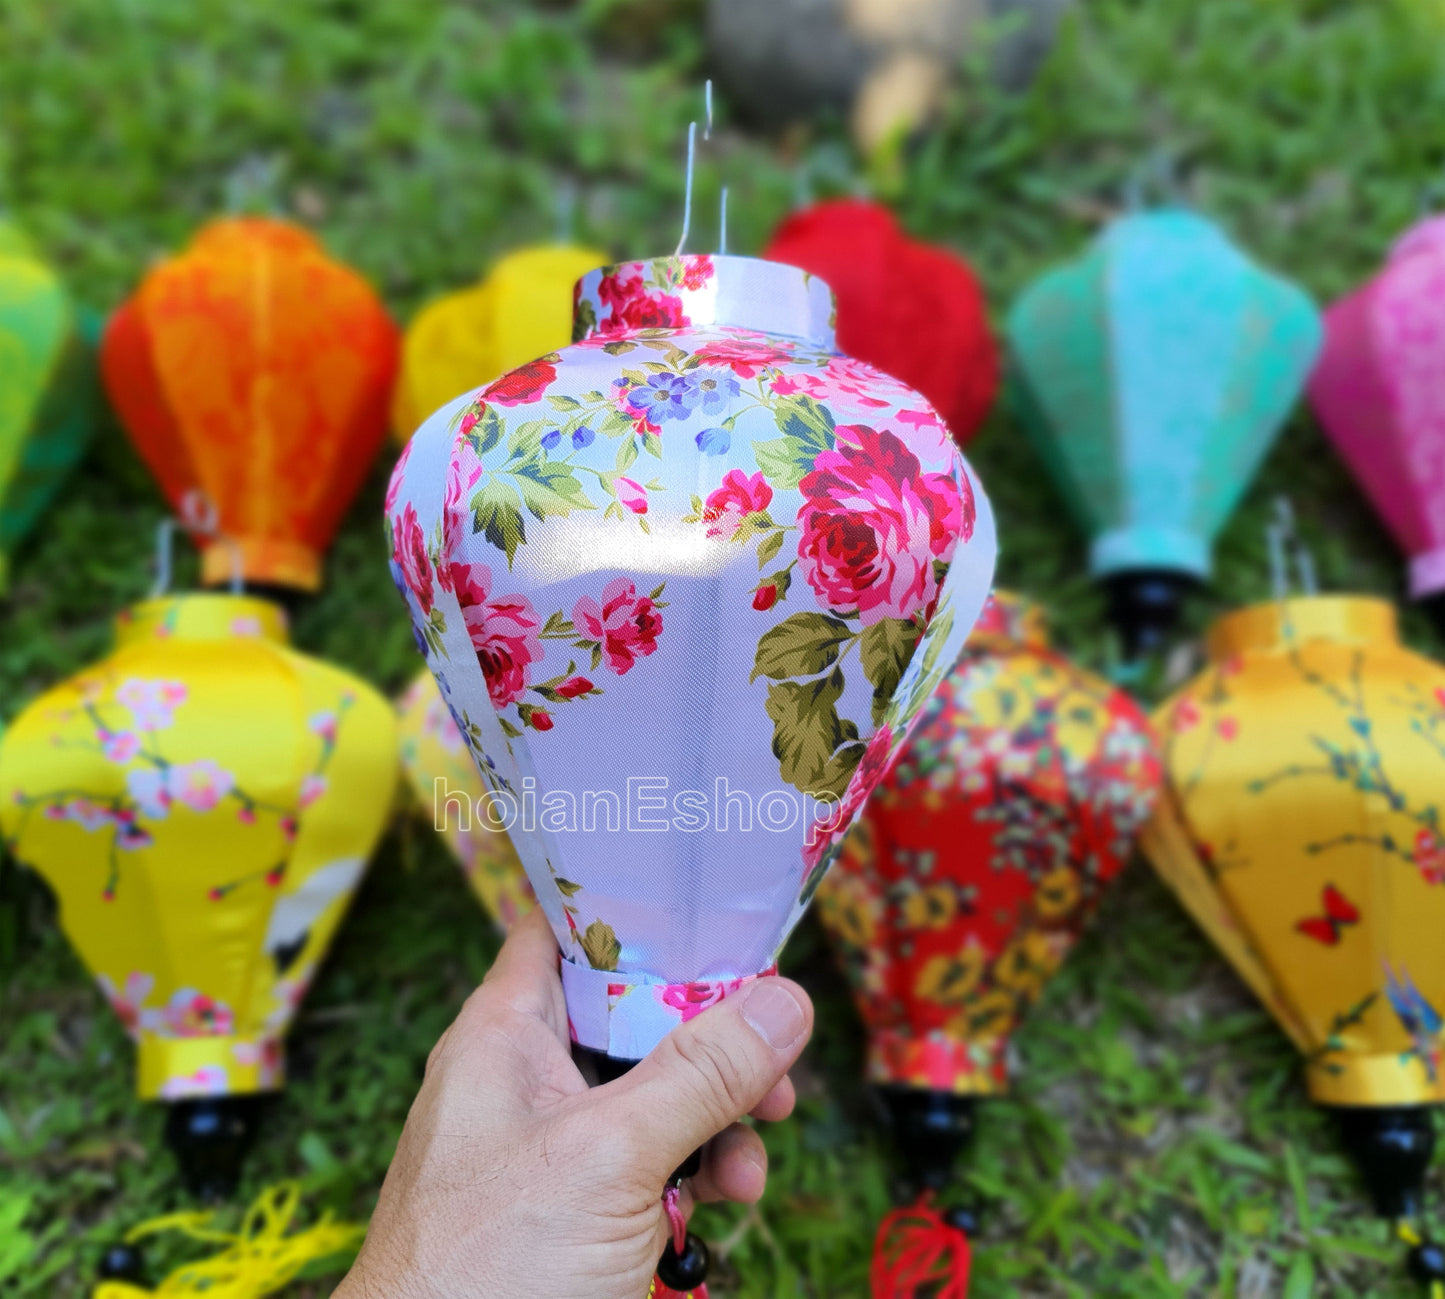 Set of 8 Hoi An bamboo silk lanterns 22cm - Mix shape and color - Personalization - Patio decoration - Wedding lanterns - Garden lanterns